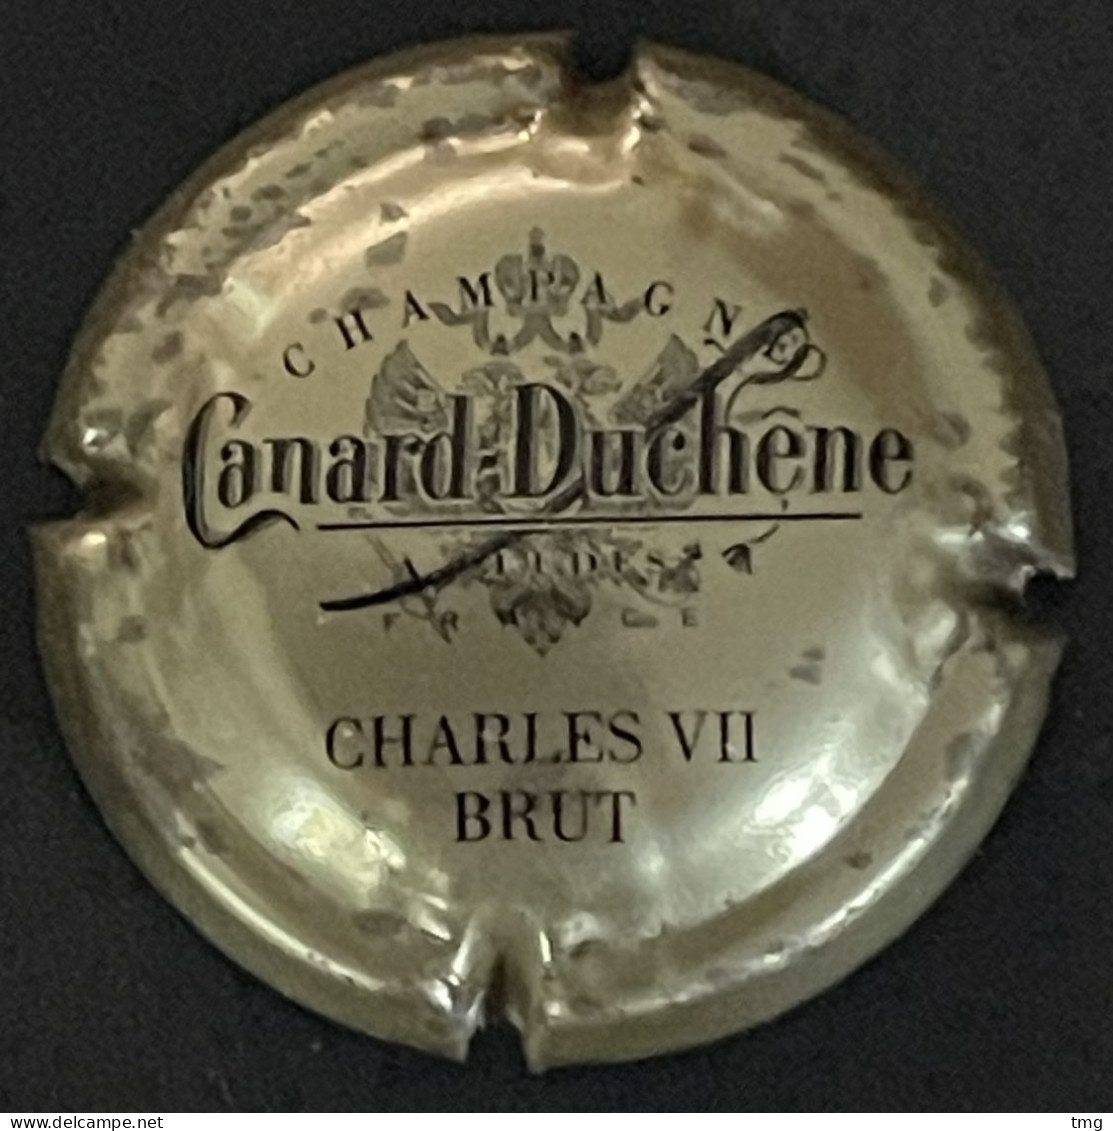 102 - 70 - Canard-Duchêne, Or, Charles VII Brut - Tâchée (côte 2 €) Capsule De Champagne - Canard Duchêne